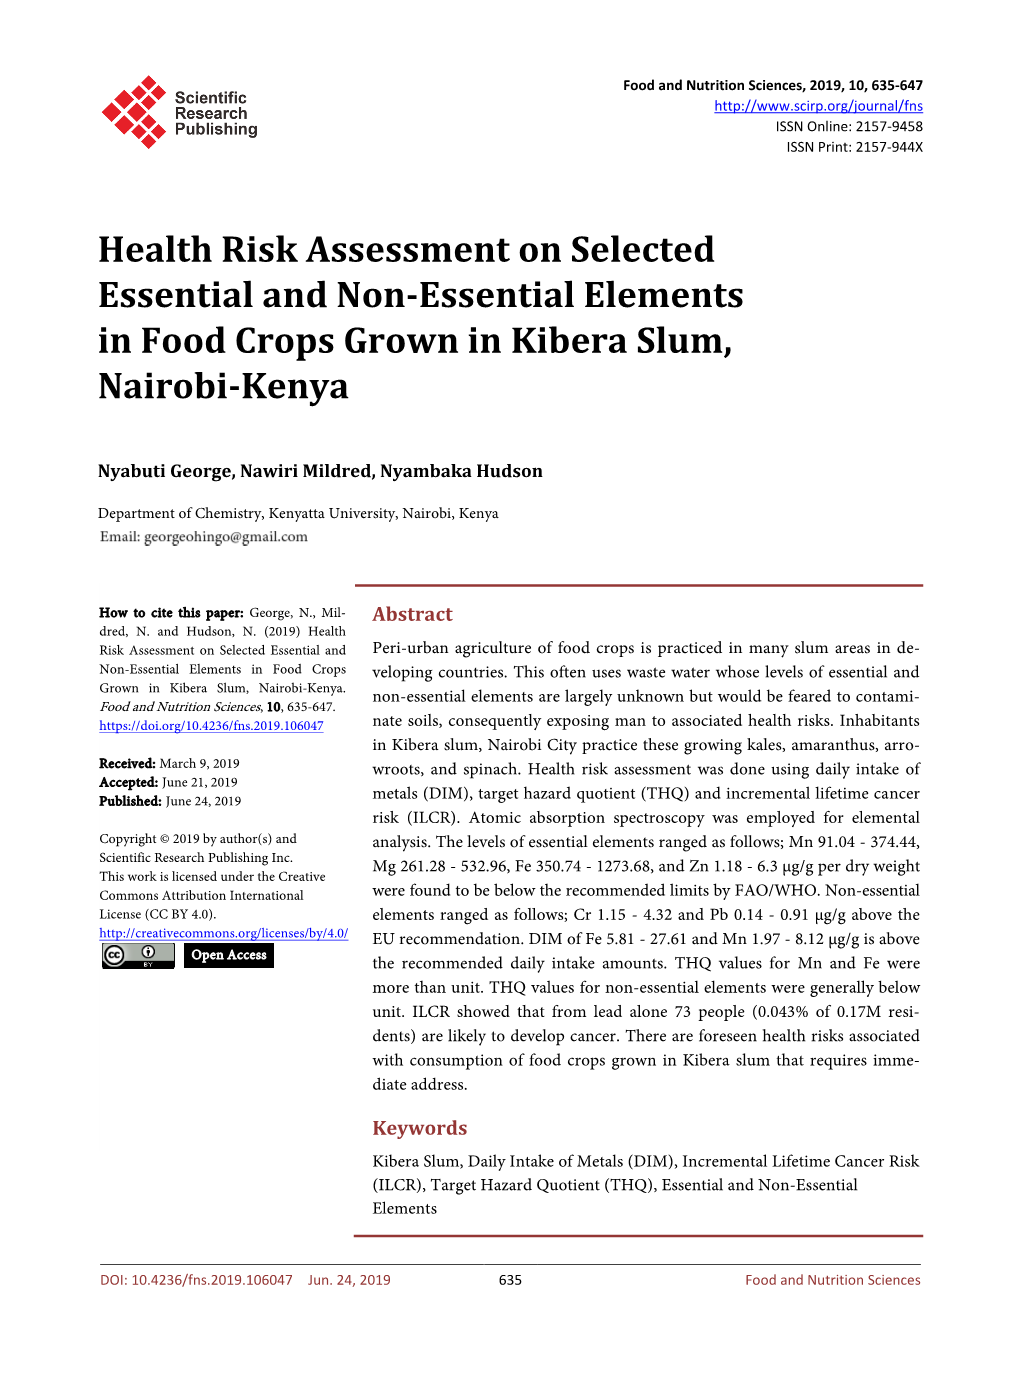 Health Risk Assessment on Selected Essential and Non-Essential Elements in Food Crops Grown in Kibera Slum, Nairobi-Kenya